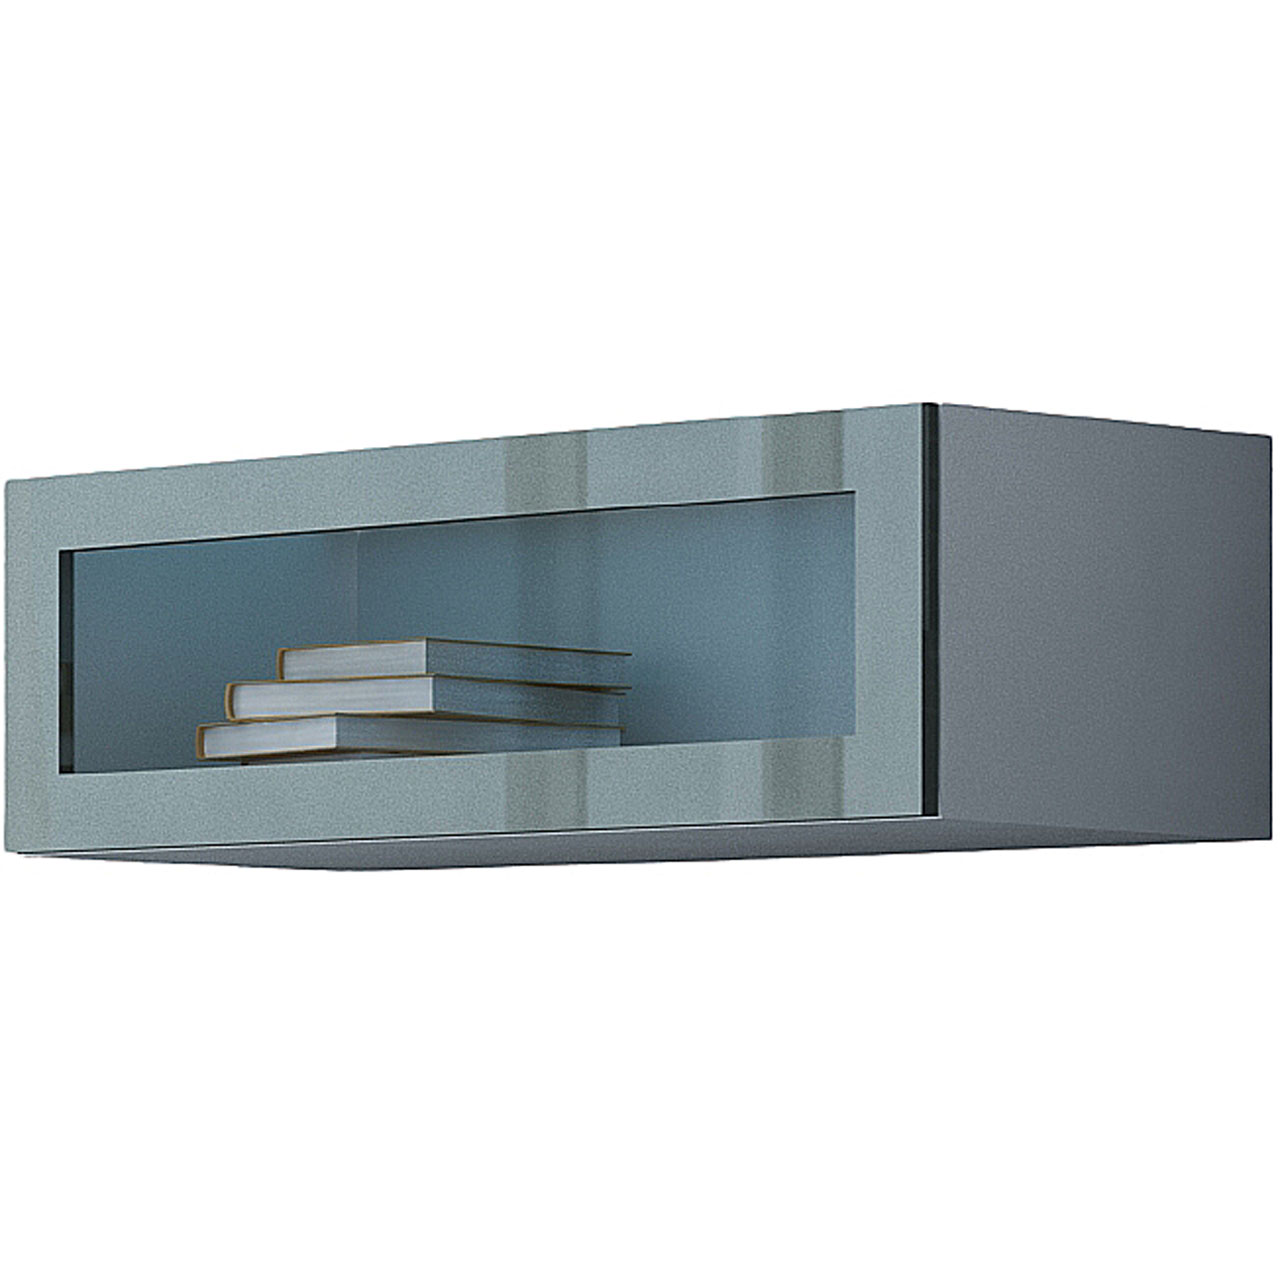 Wall display cabinet 90 VIGO GREY A VG6 white / grey gloss